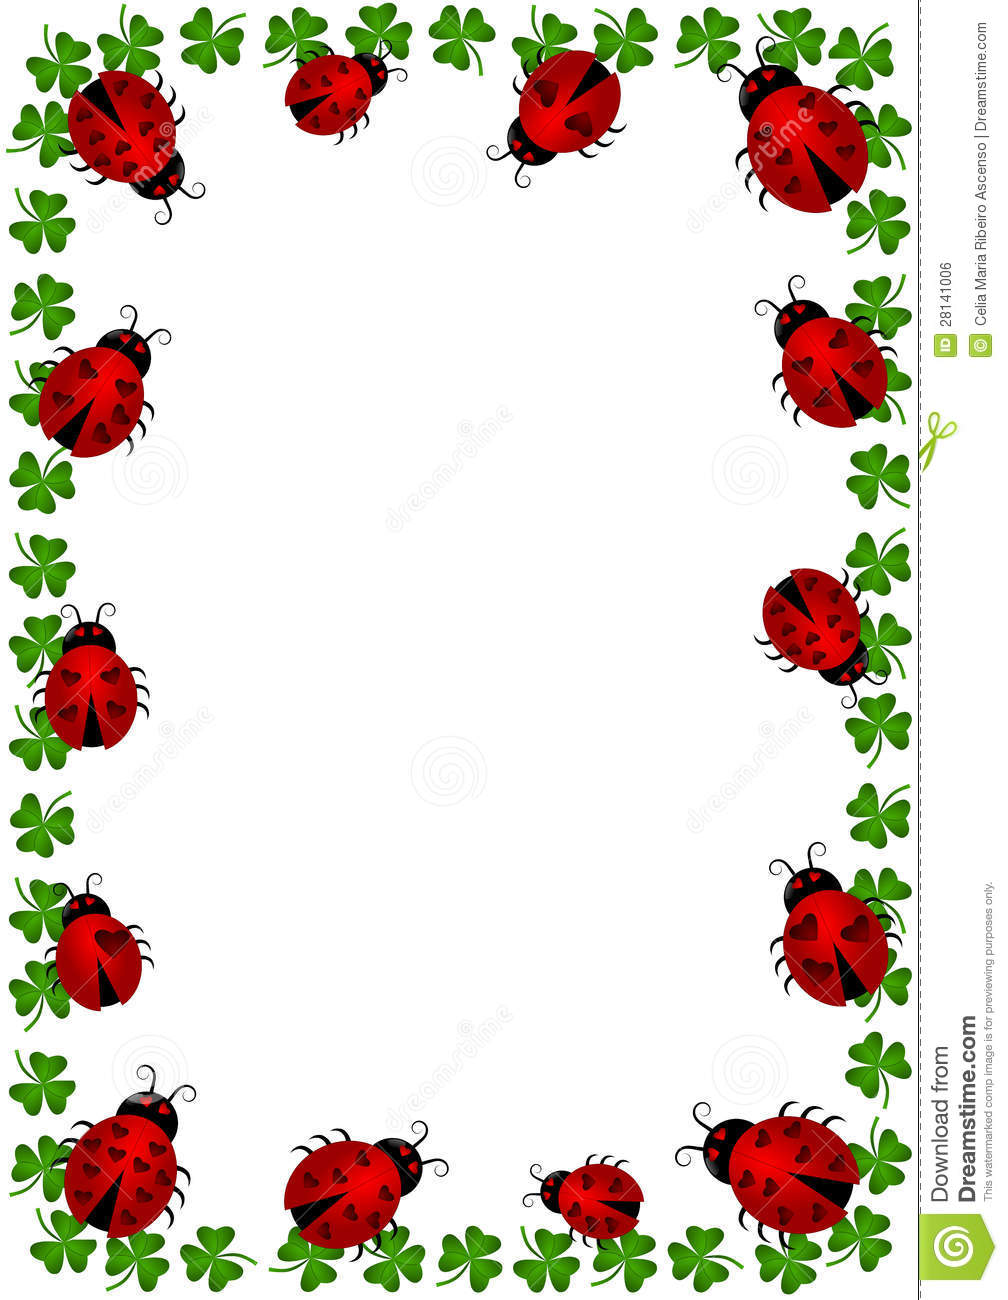 Ladybugs Border Frame With Clovers Royalty Free Stock Image   Image